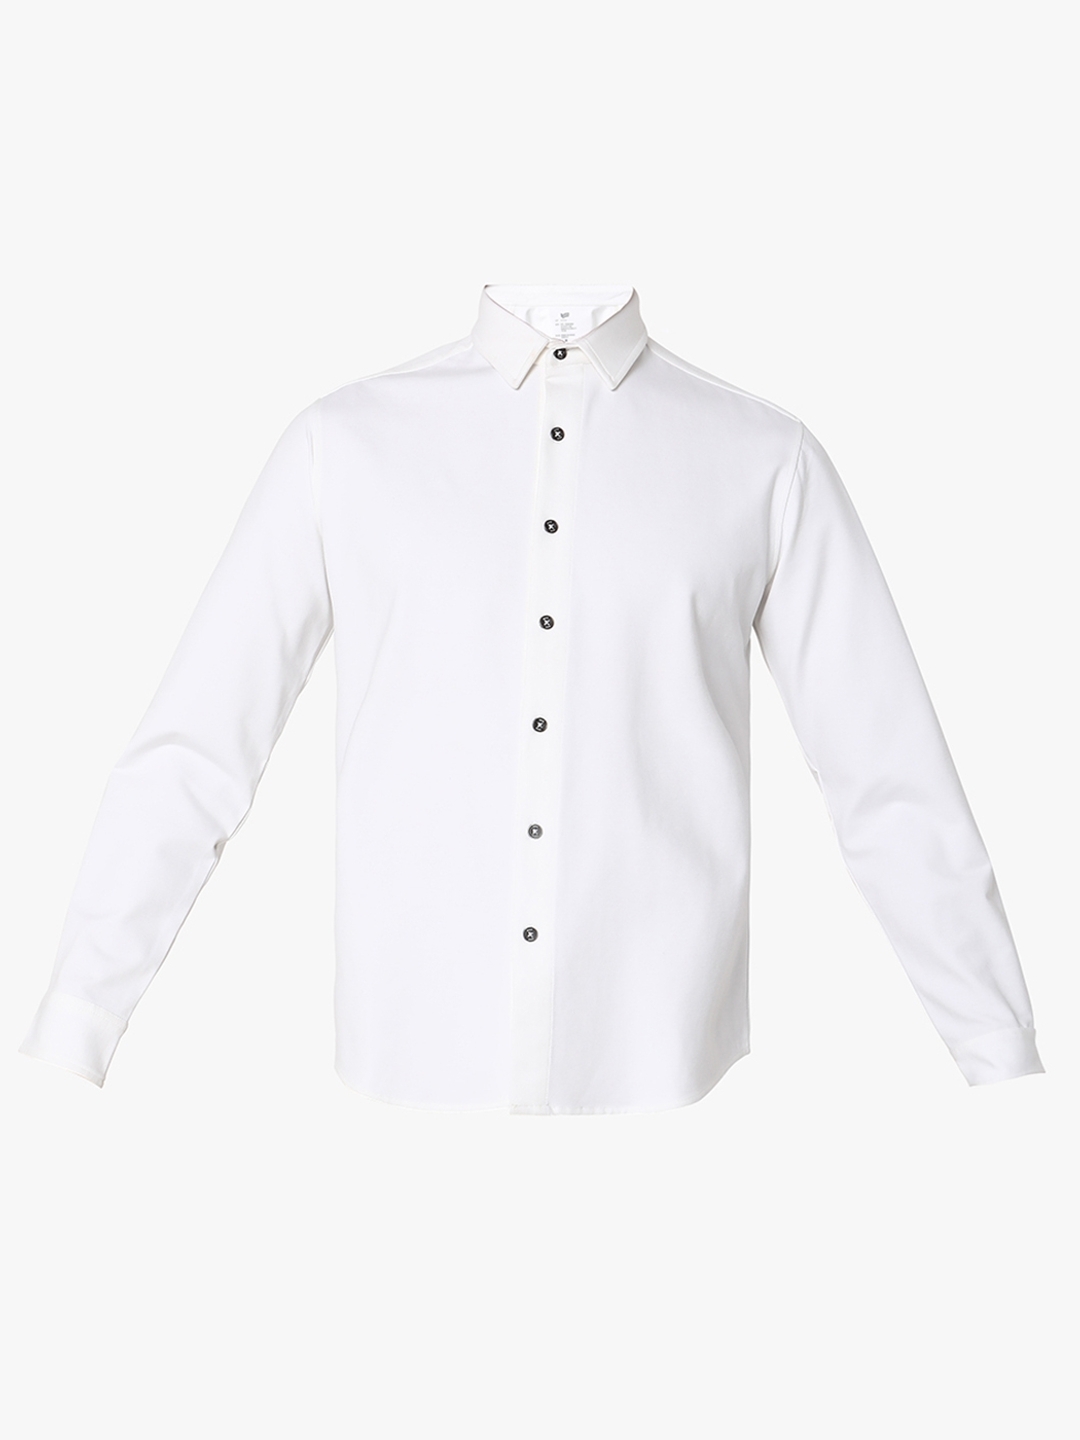 Regular Fit Full Sleeve Solid Nylon Shirts